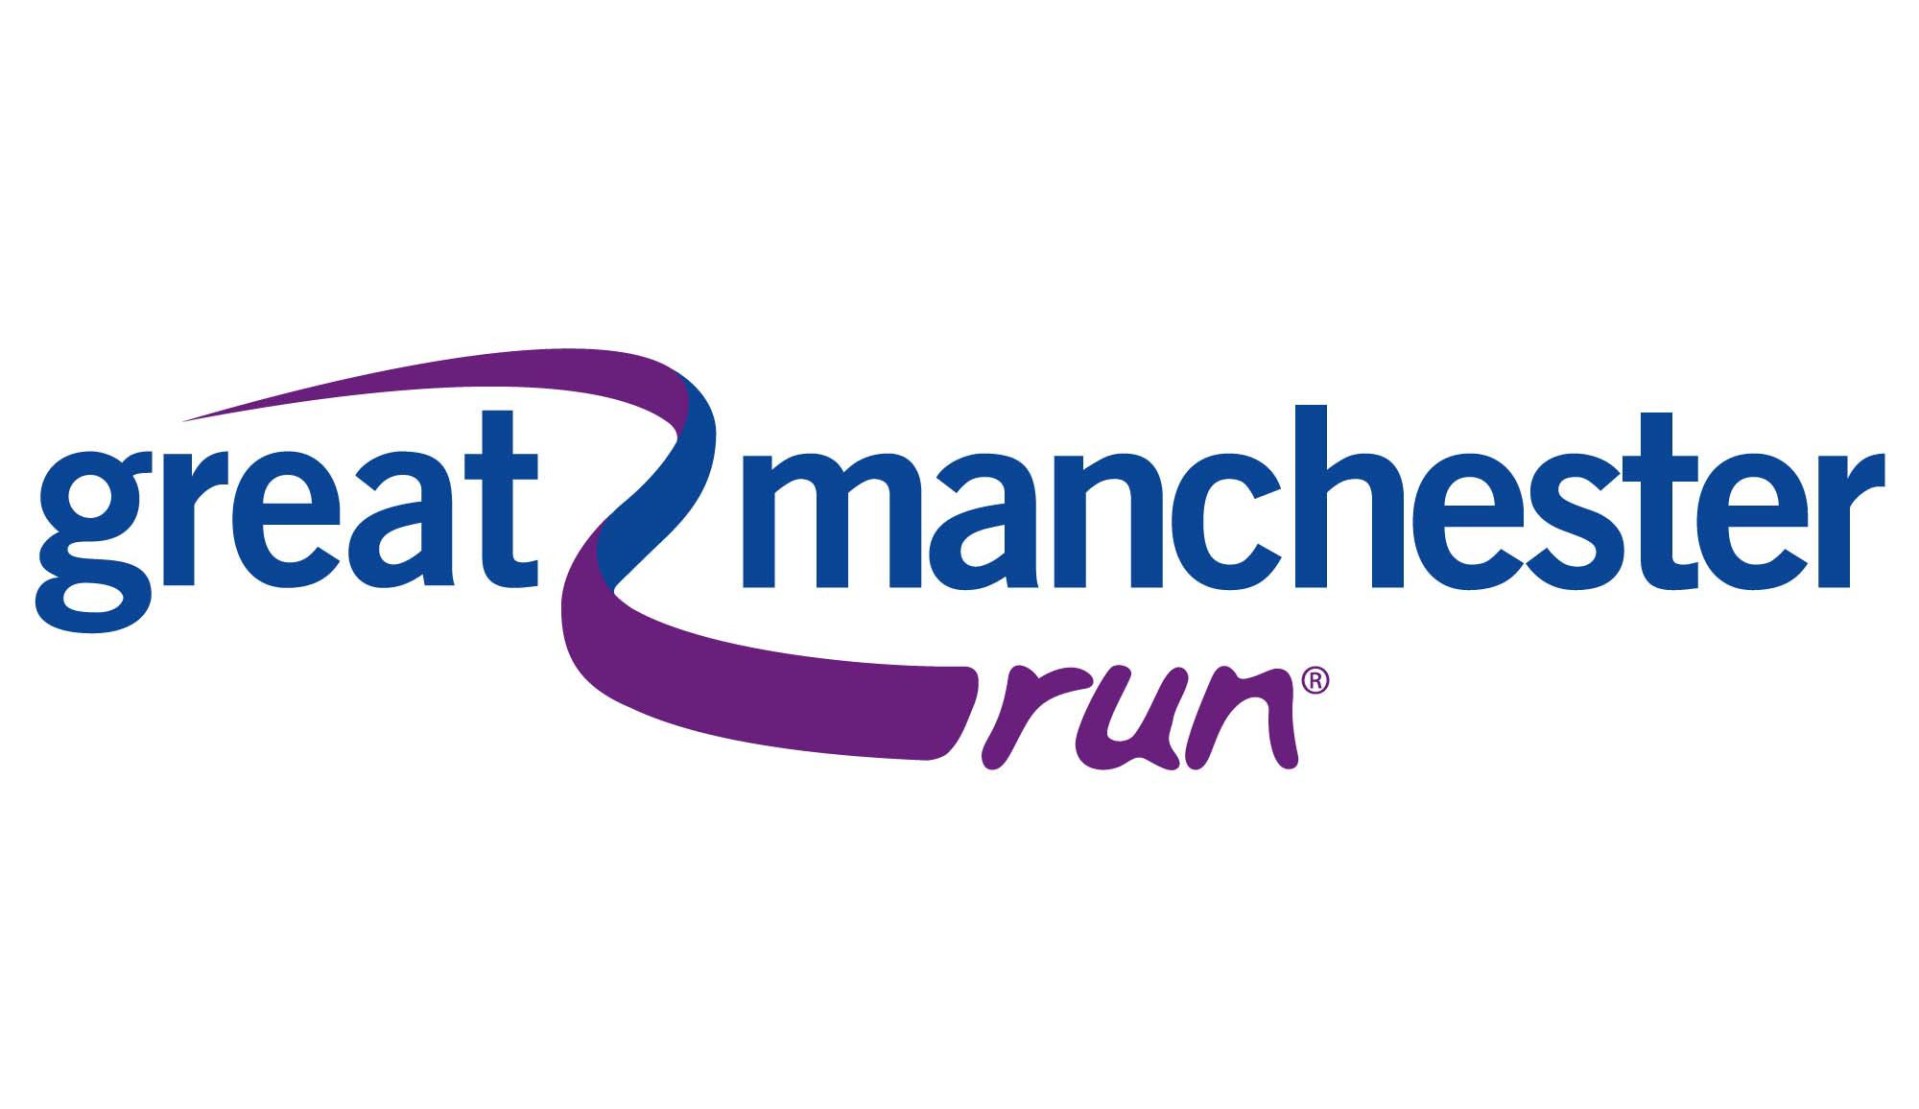 Great Manchester Run logo on RaceRaves